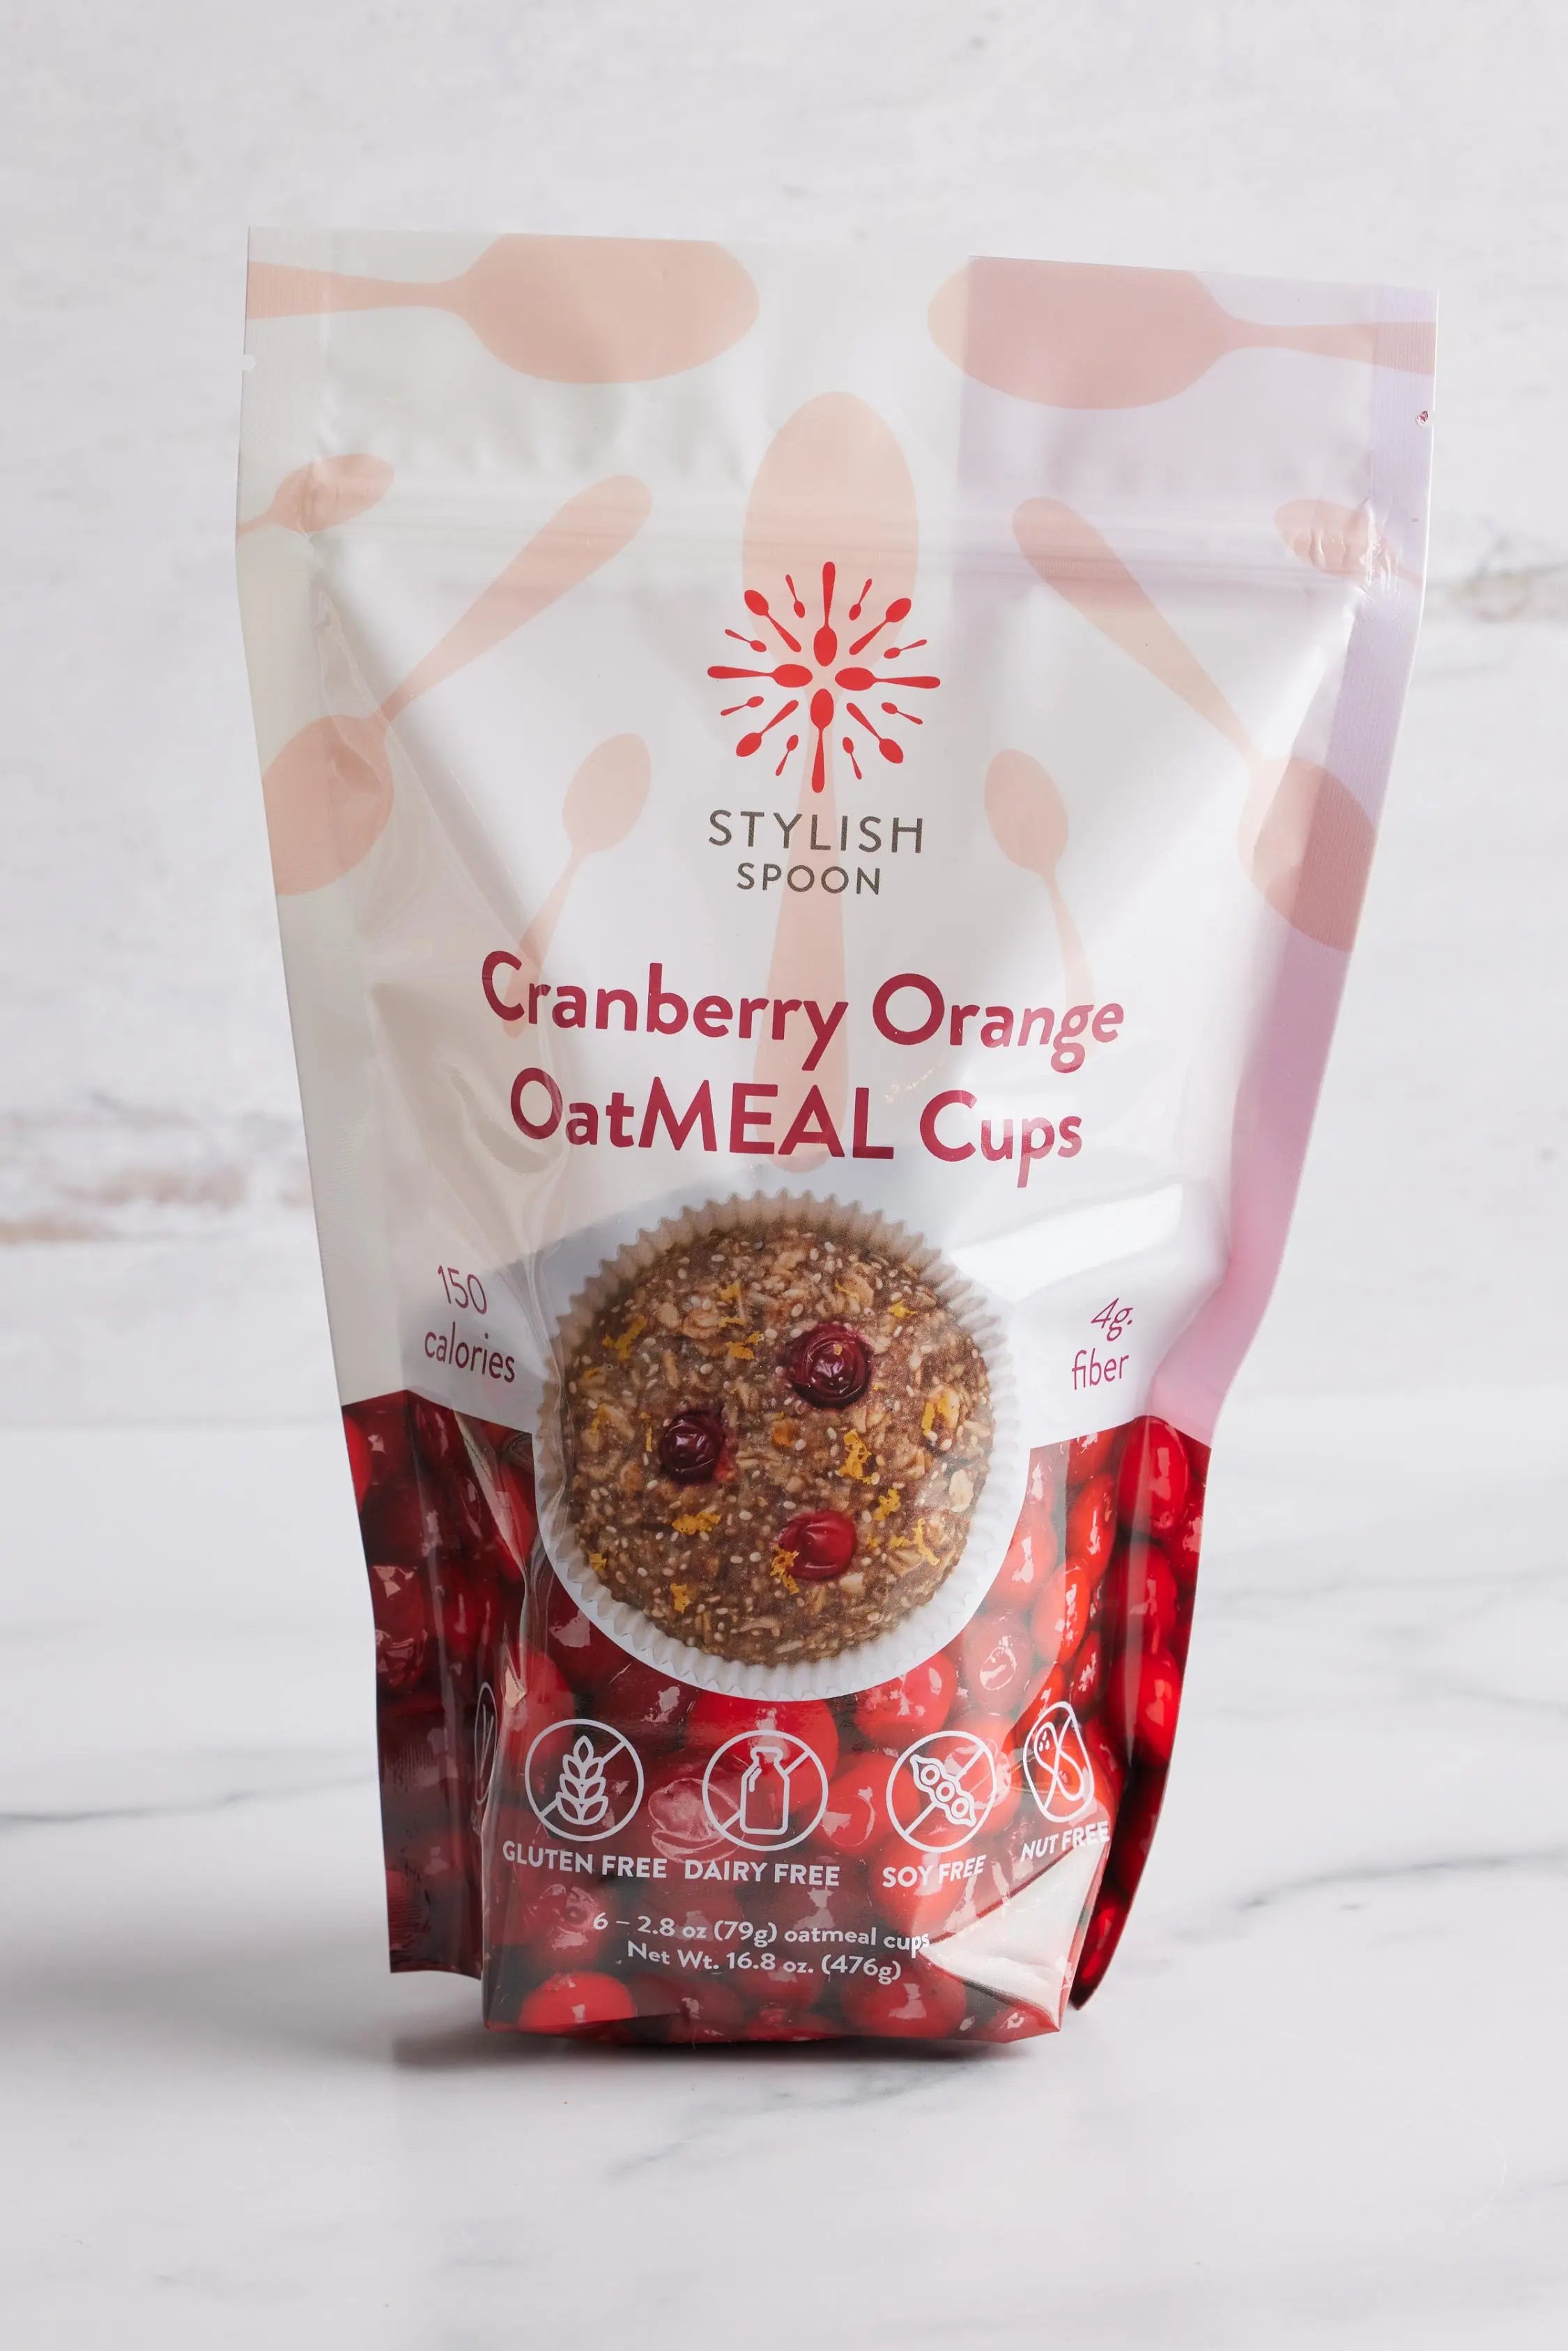 Cranberry + Orange OatMEAL Cups Stylish Spoon